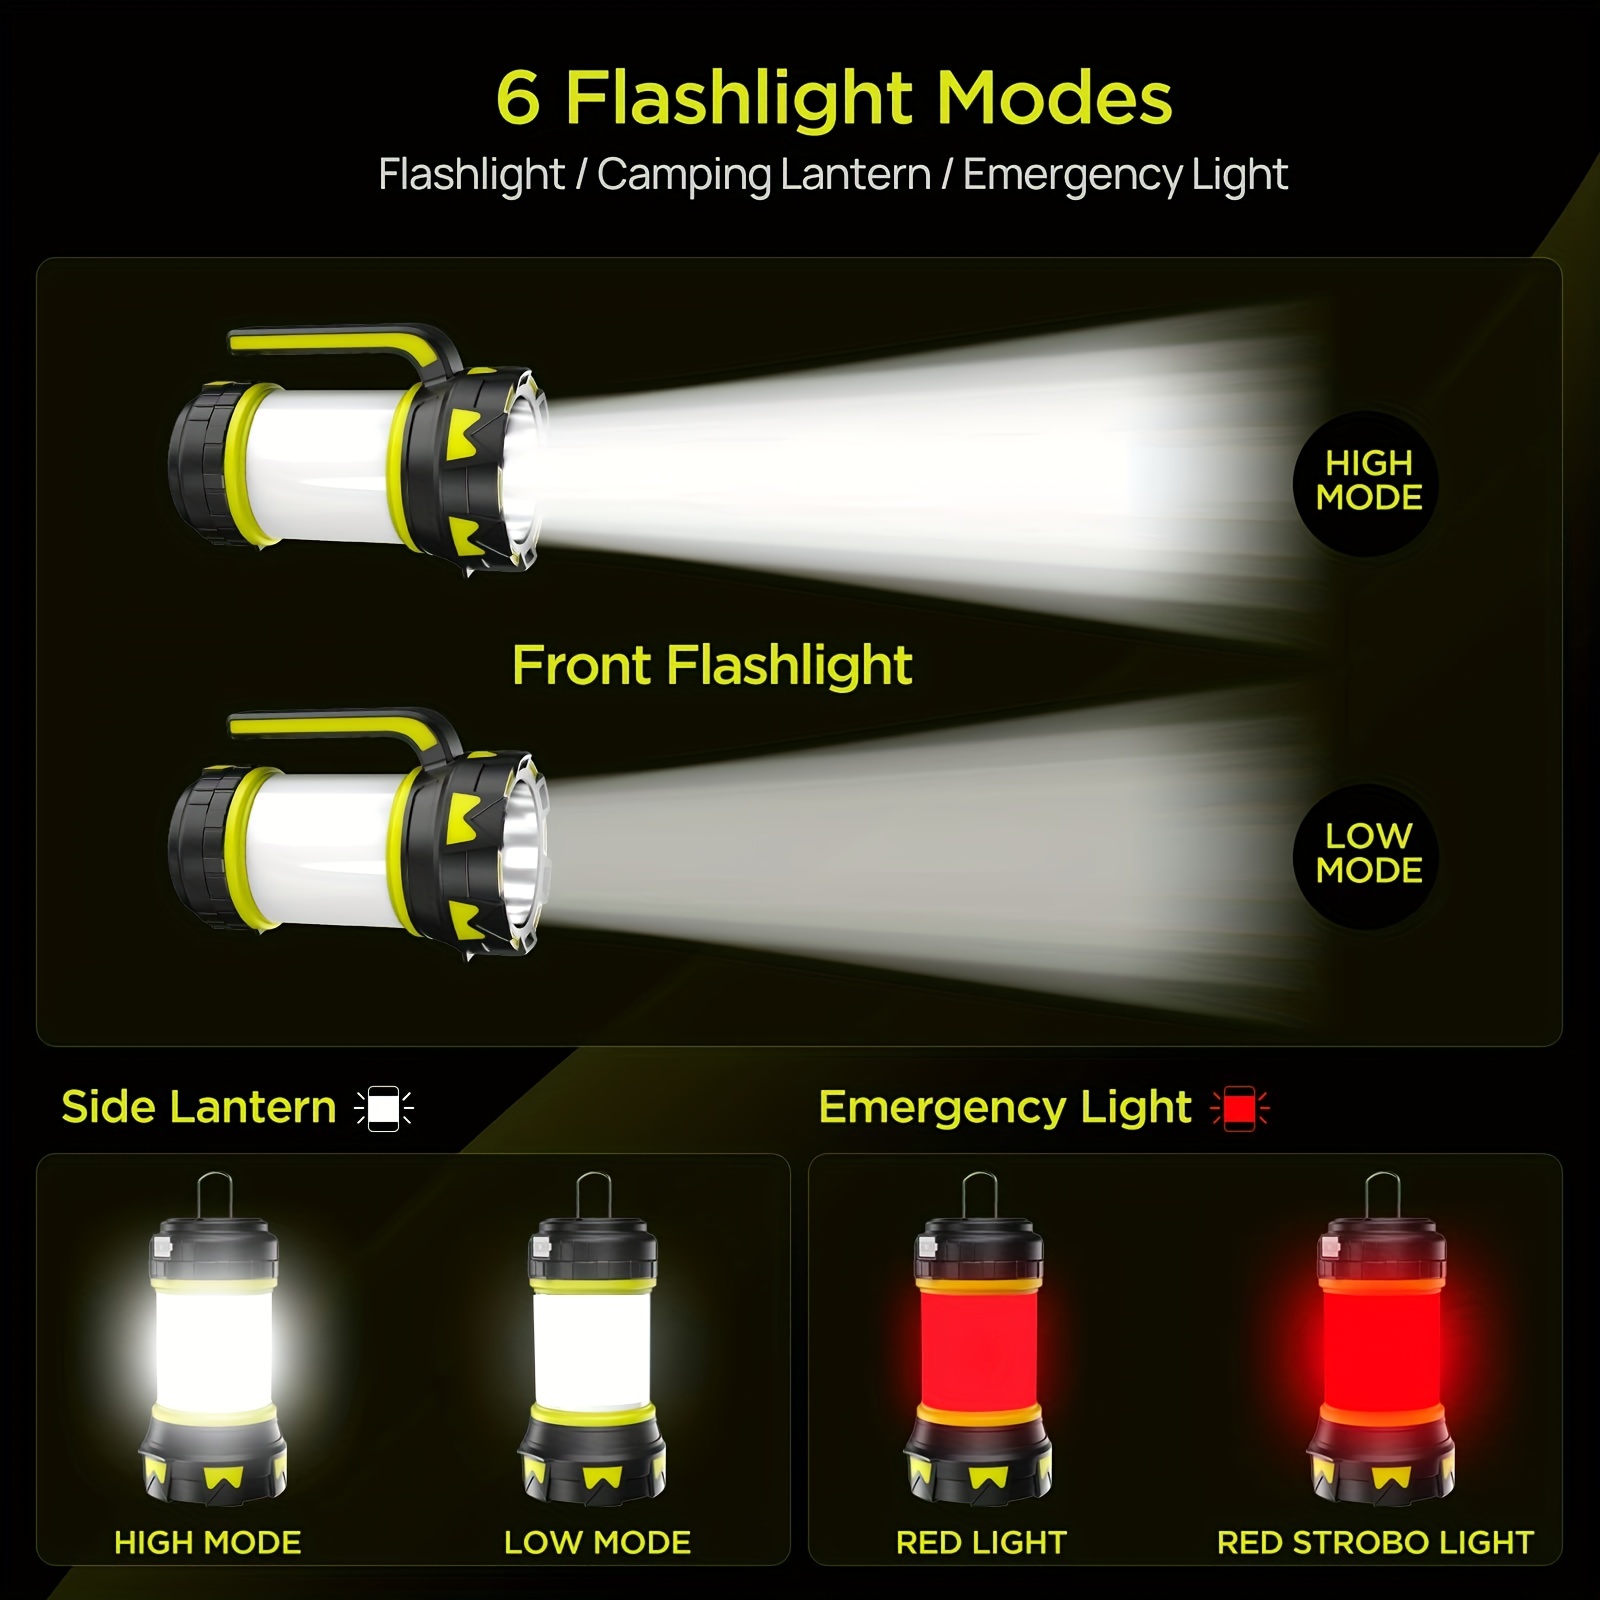 https://img.kwcdn.com/product/rechargeable-camping-lantern-flashlight/d69d2f15w98k18-f4319775/Fancyalgo/VirtualModelMatting/490d0b4163786fe3105f09cf8ca6229b.jpg?imageMogr2/auto-orient%7CimageView2/2/w/800/q/70/format/webp